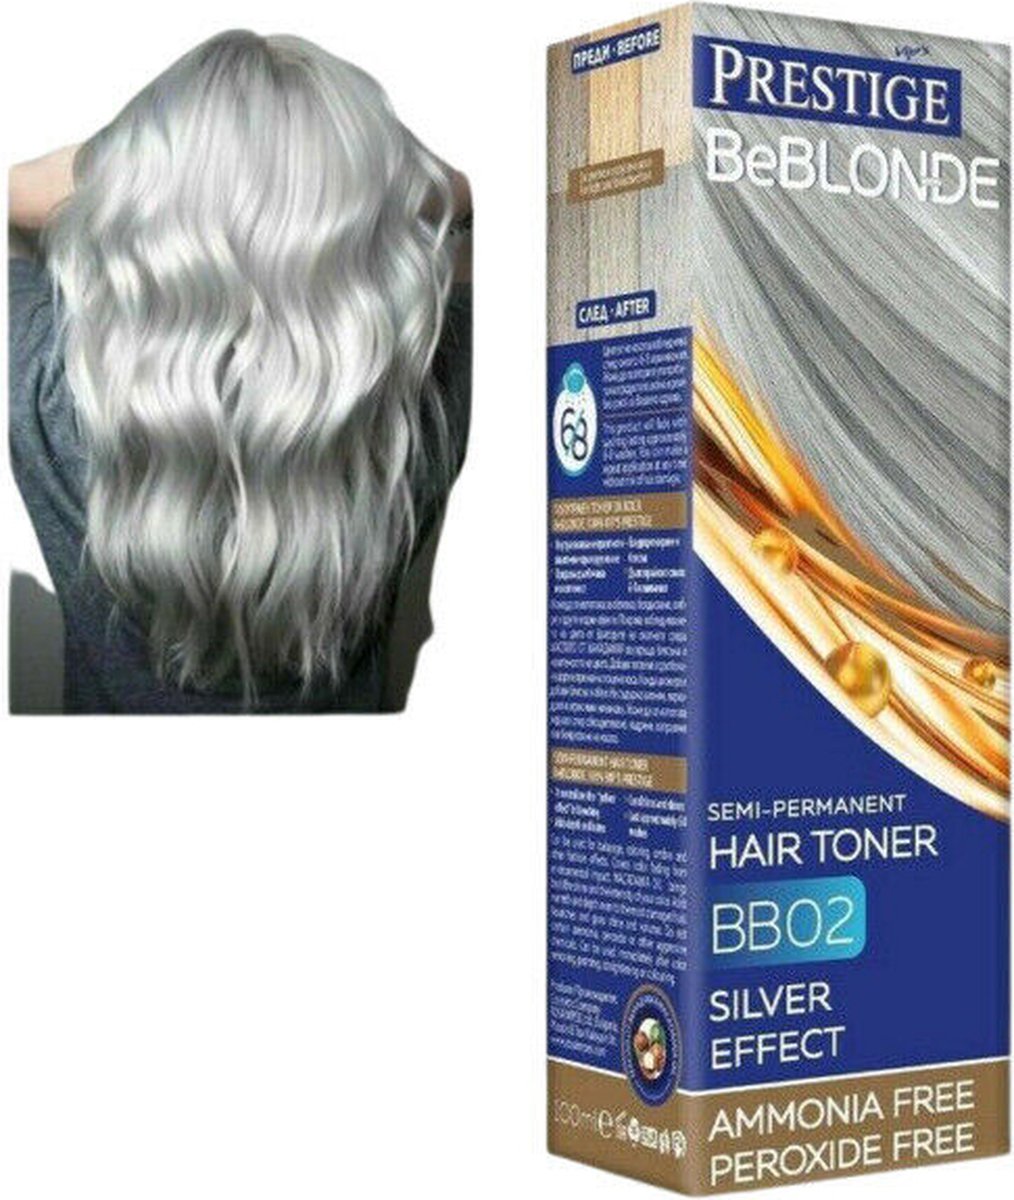 Prestige BeBlonde Semi-Permanent Hair Toner - Silver Efect (BB02)